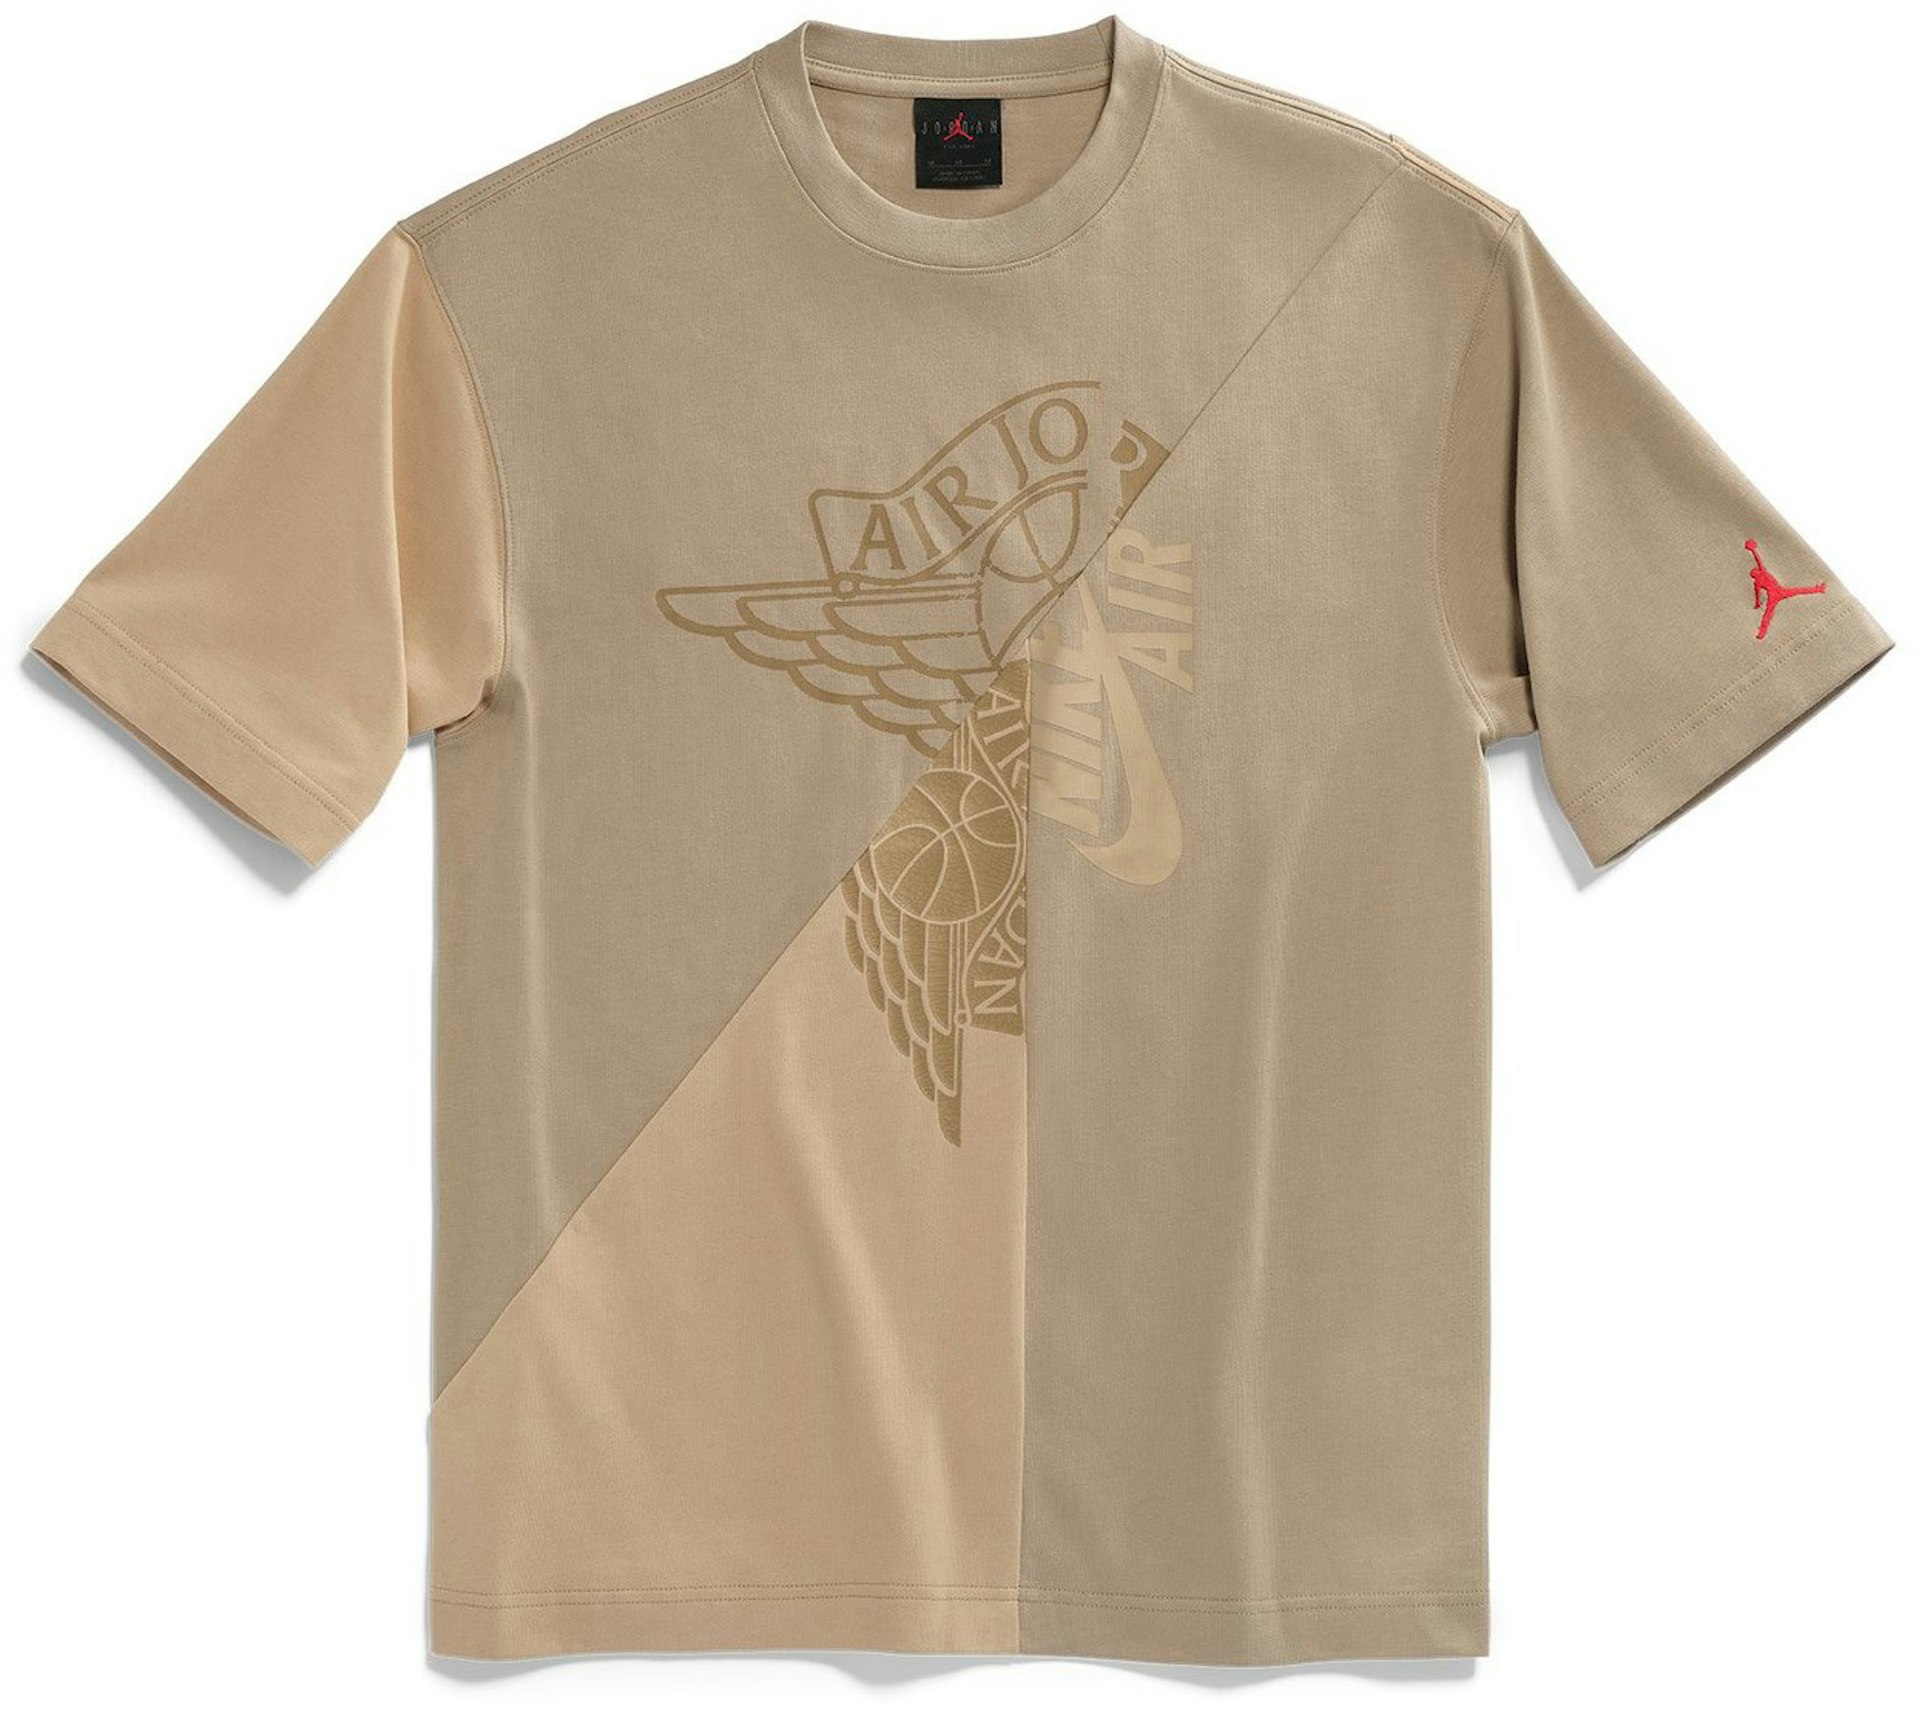 fly Sygeplejeskole Modregning Travis Scott Cactus Jack x Jordan T-shirt (Asia Sizing) Khaki/Desert - SS21  Men's - US